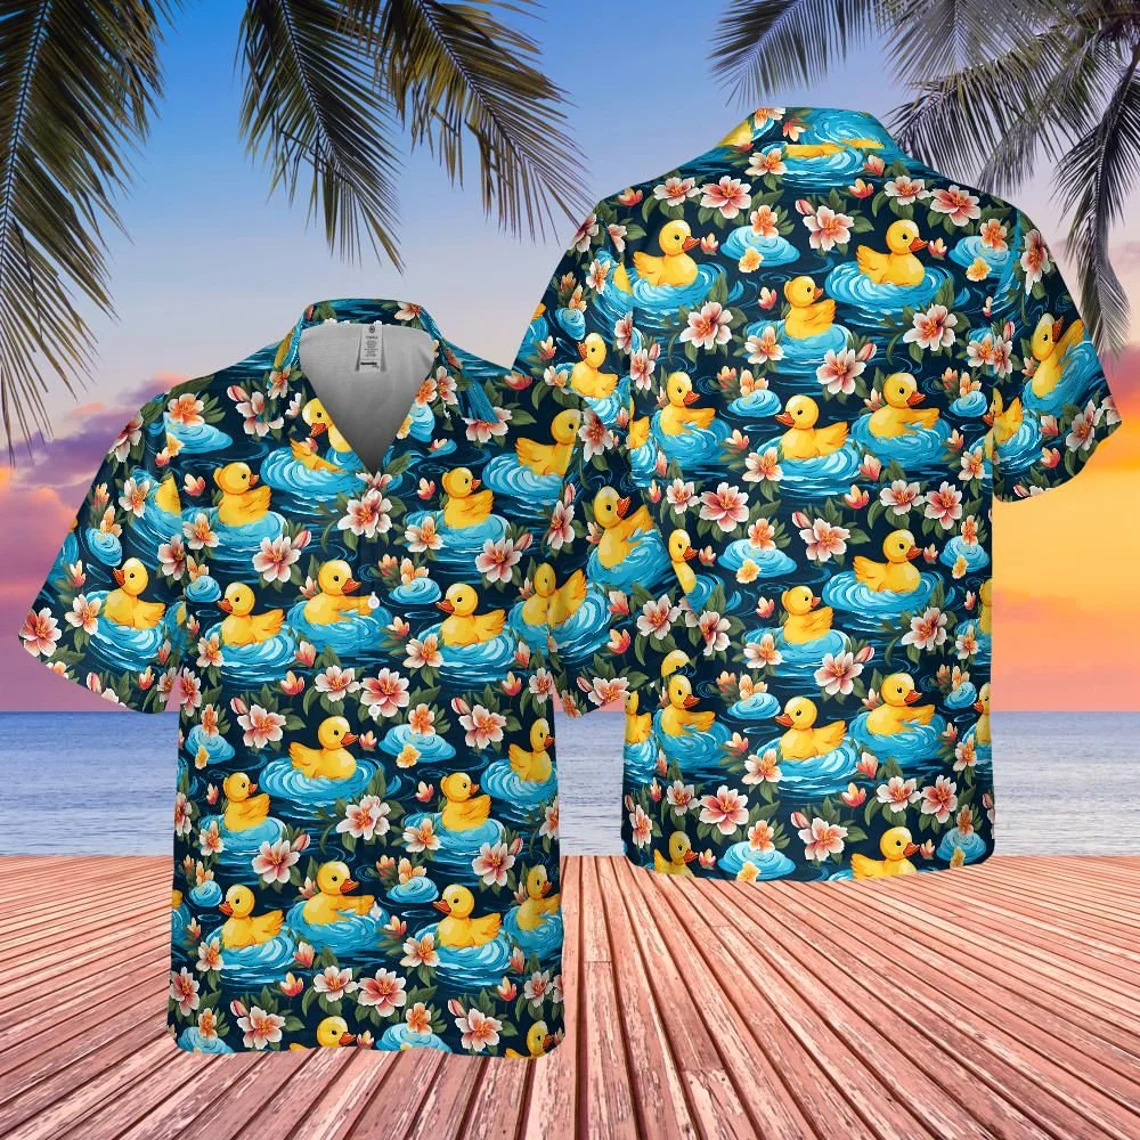 Rubber Duck Hawaiian Print Shirt: Quirky Style for Sunny Days
#RubberDuck #HawaiianShirt #SummerFashion #Beachwear #TropicalStyle #FashionTrends #MensFashion #PrintedShirt #VacationWear #SummerStyle #Fashionista #AmericanFashion

tipatee.com/product/rubber…